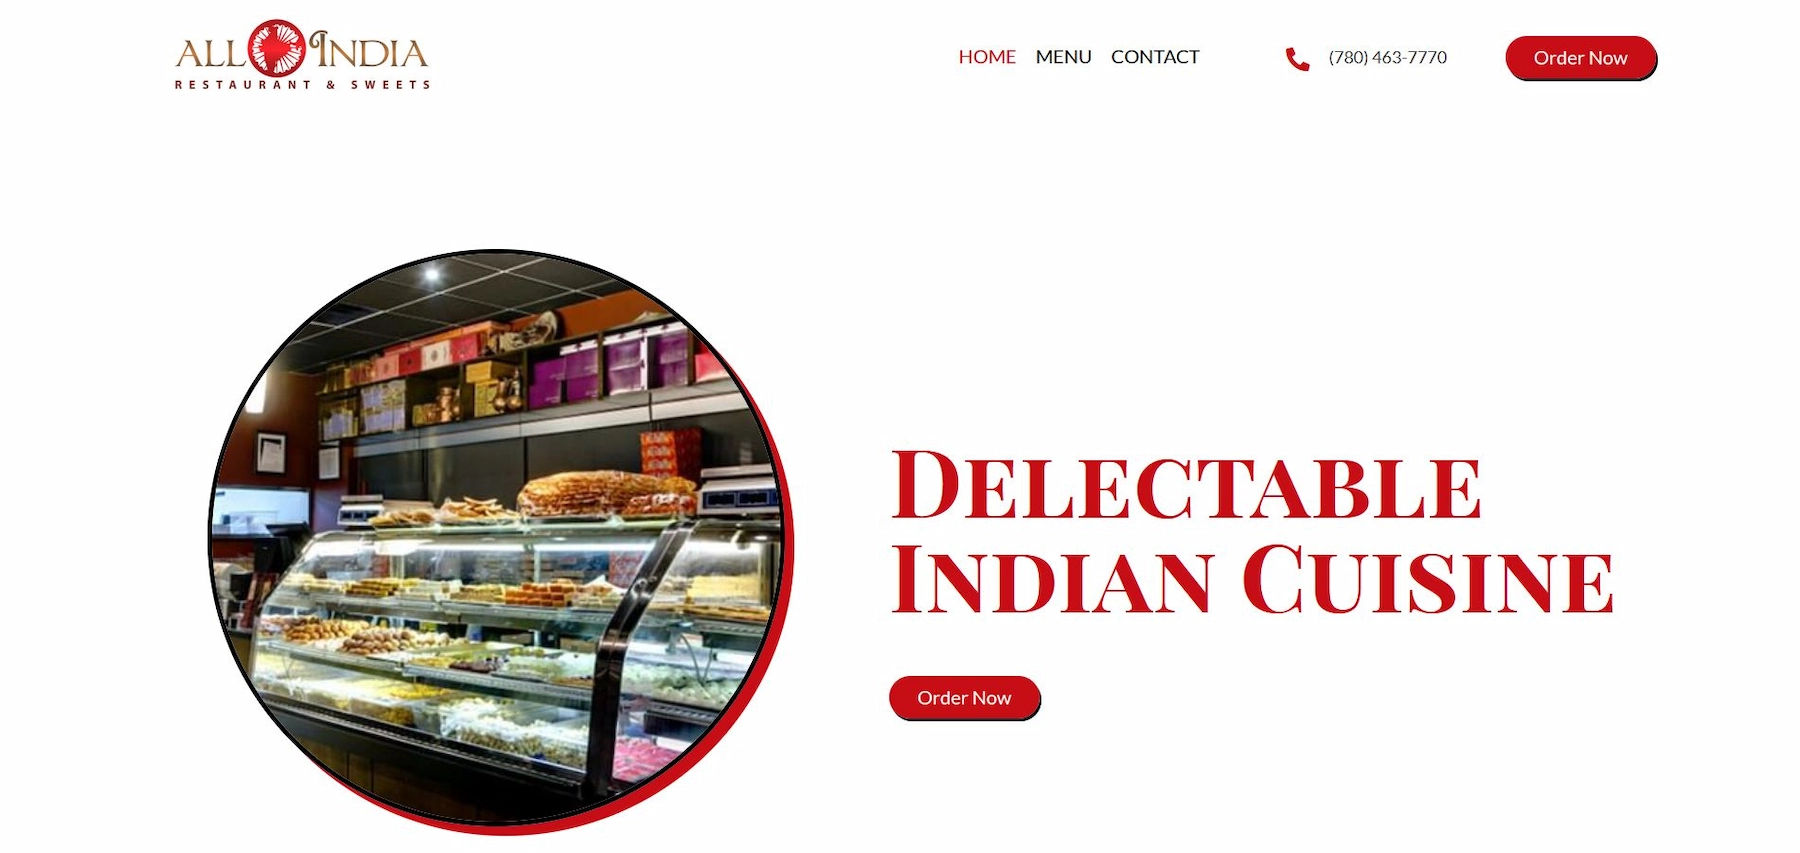 All India Restaurant Old Website